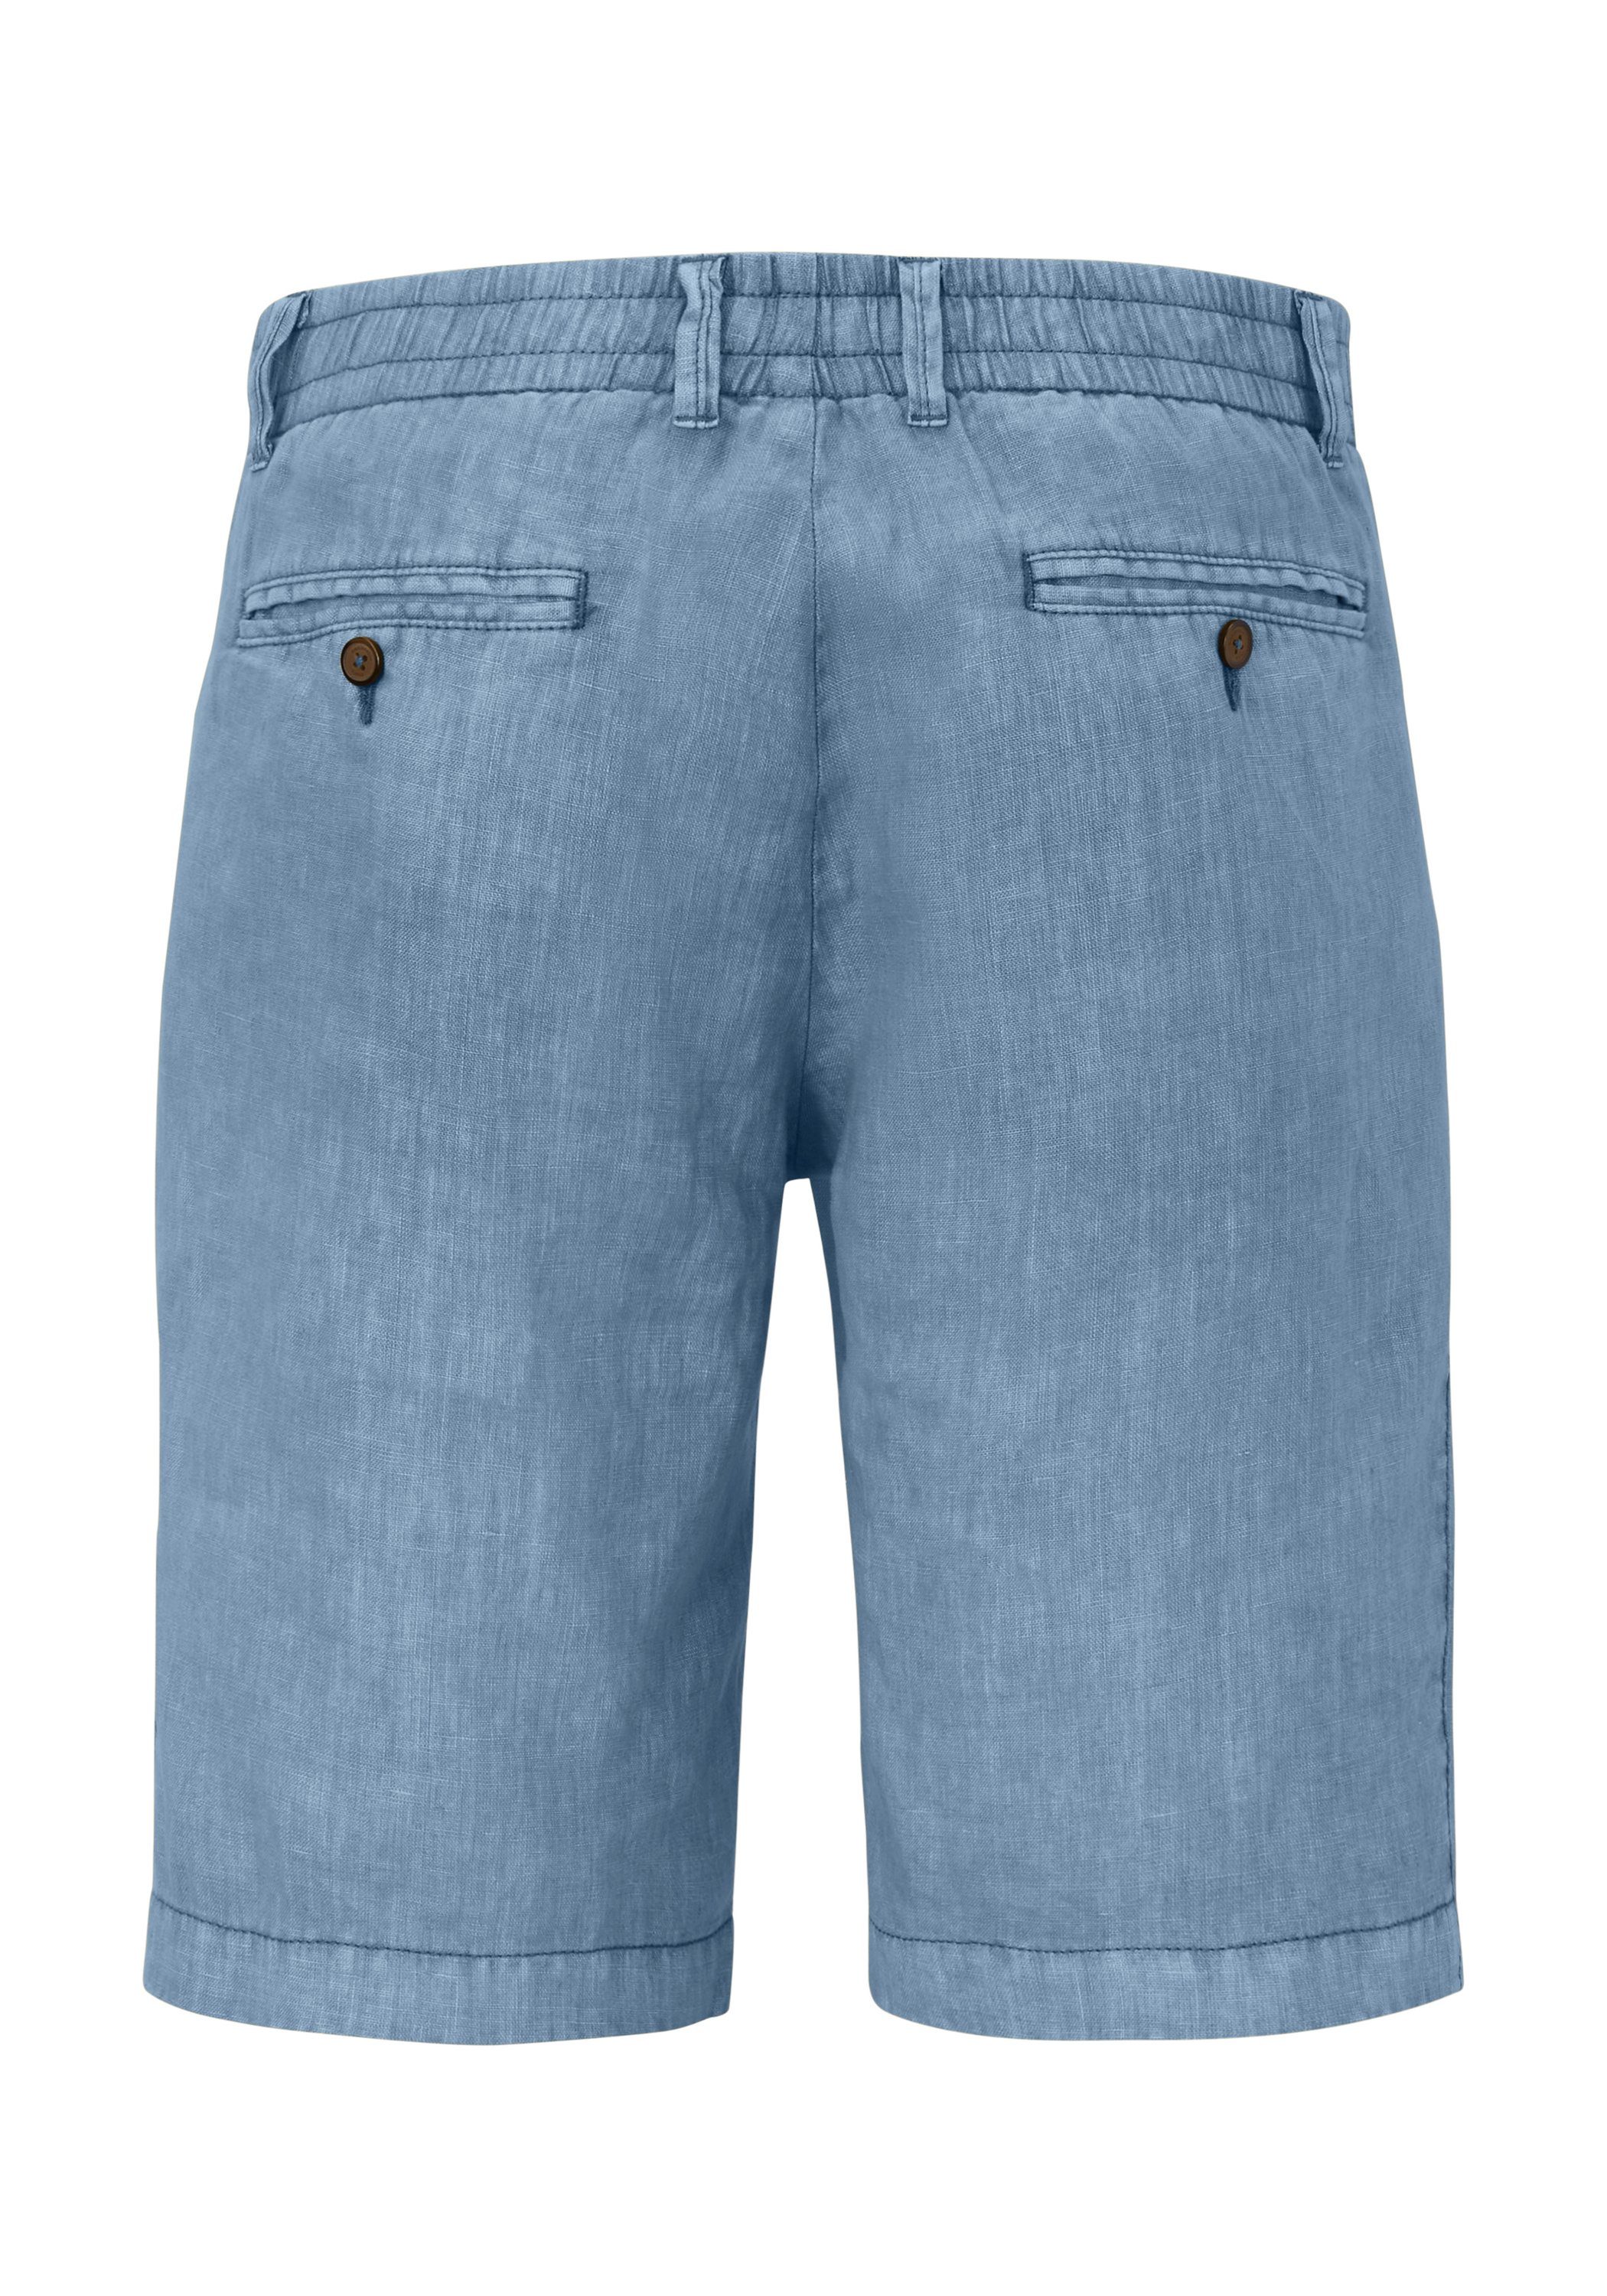 2 S4 Modern MAUI Leinen panoramic Jackets Leichte blue Fit Bermudas Shorts aus